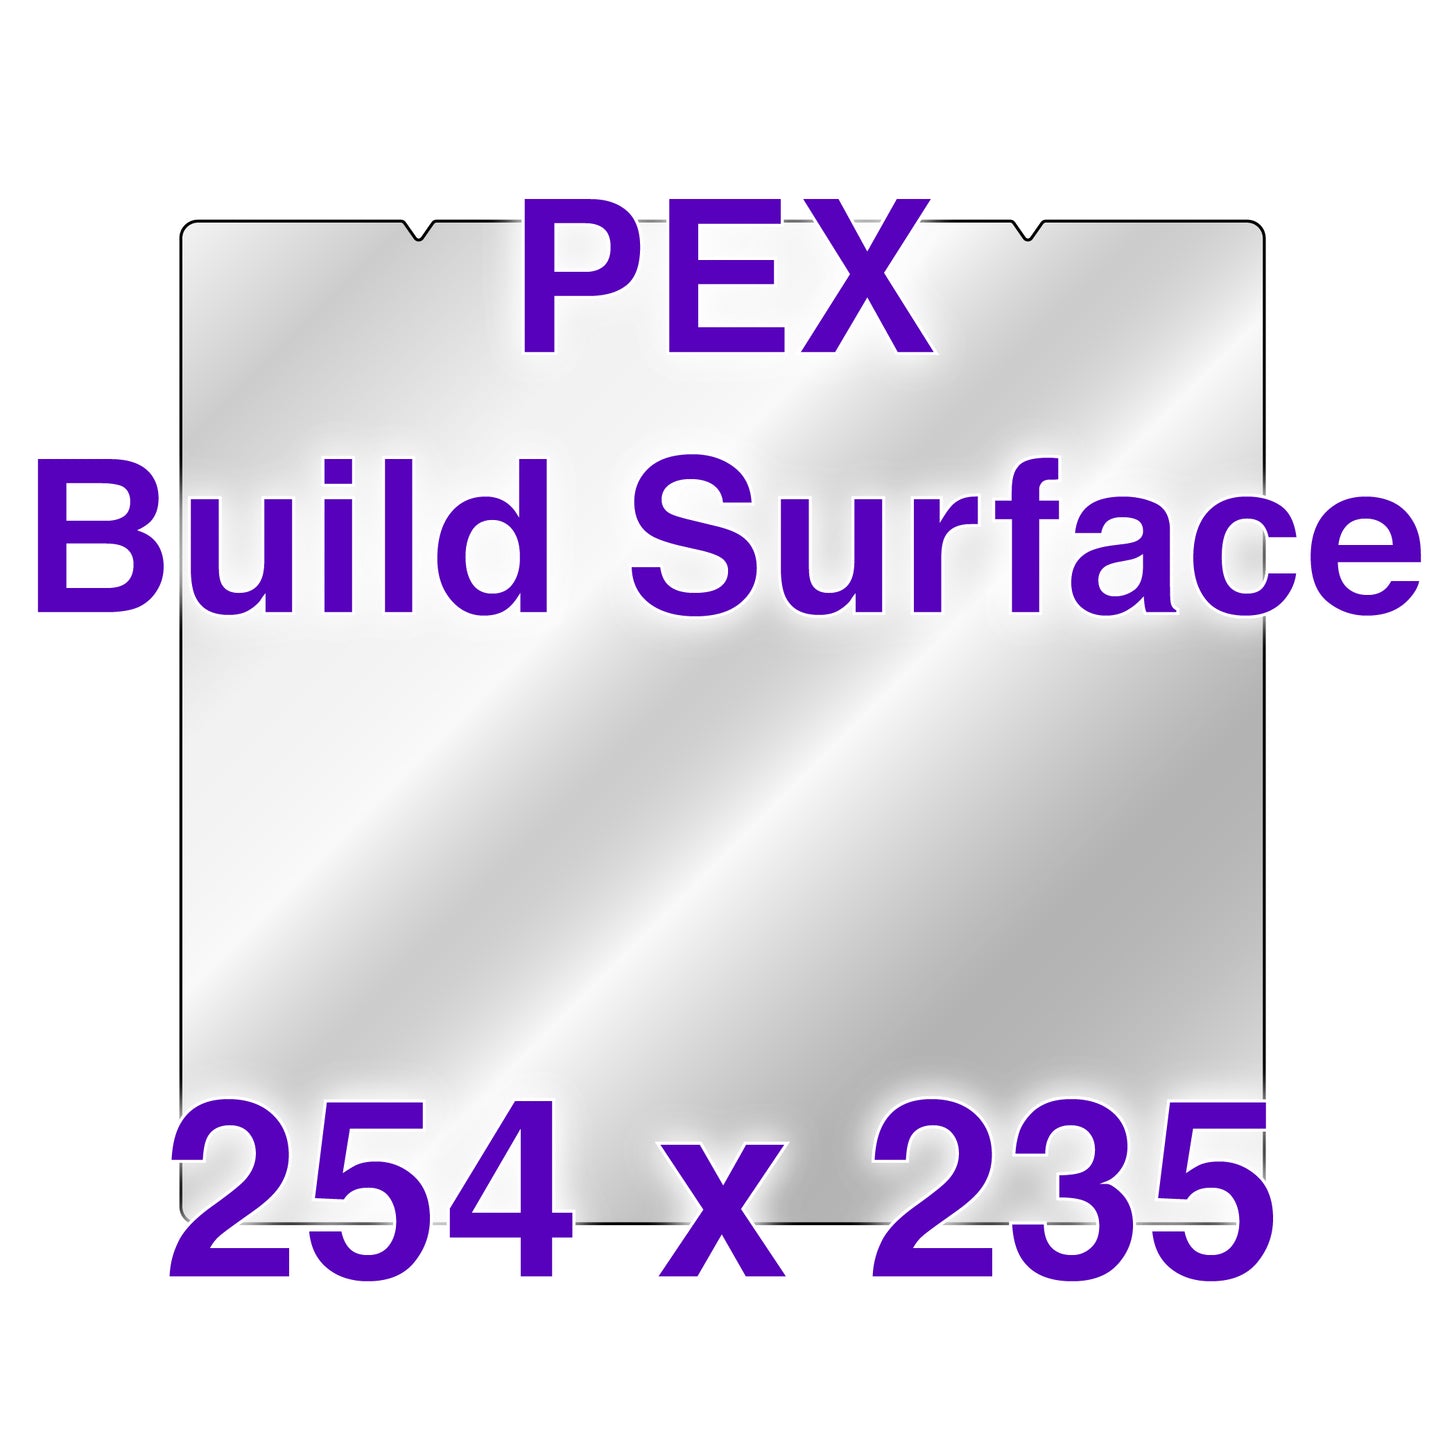 PEX Build Surface - 254 x 235